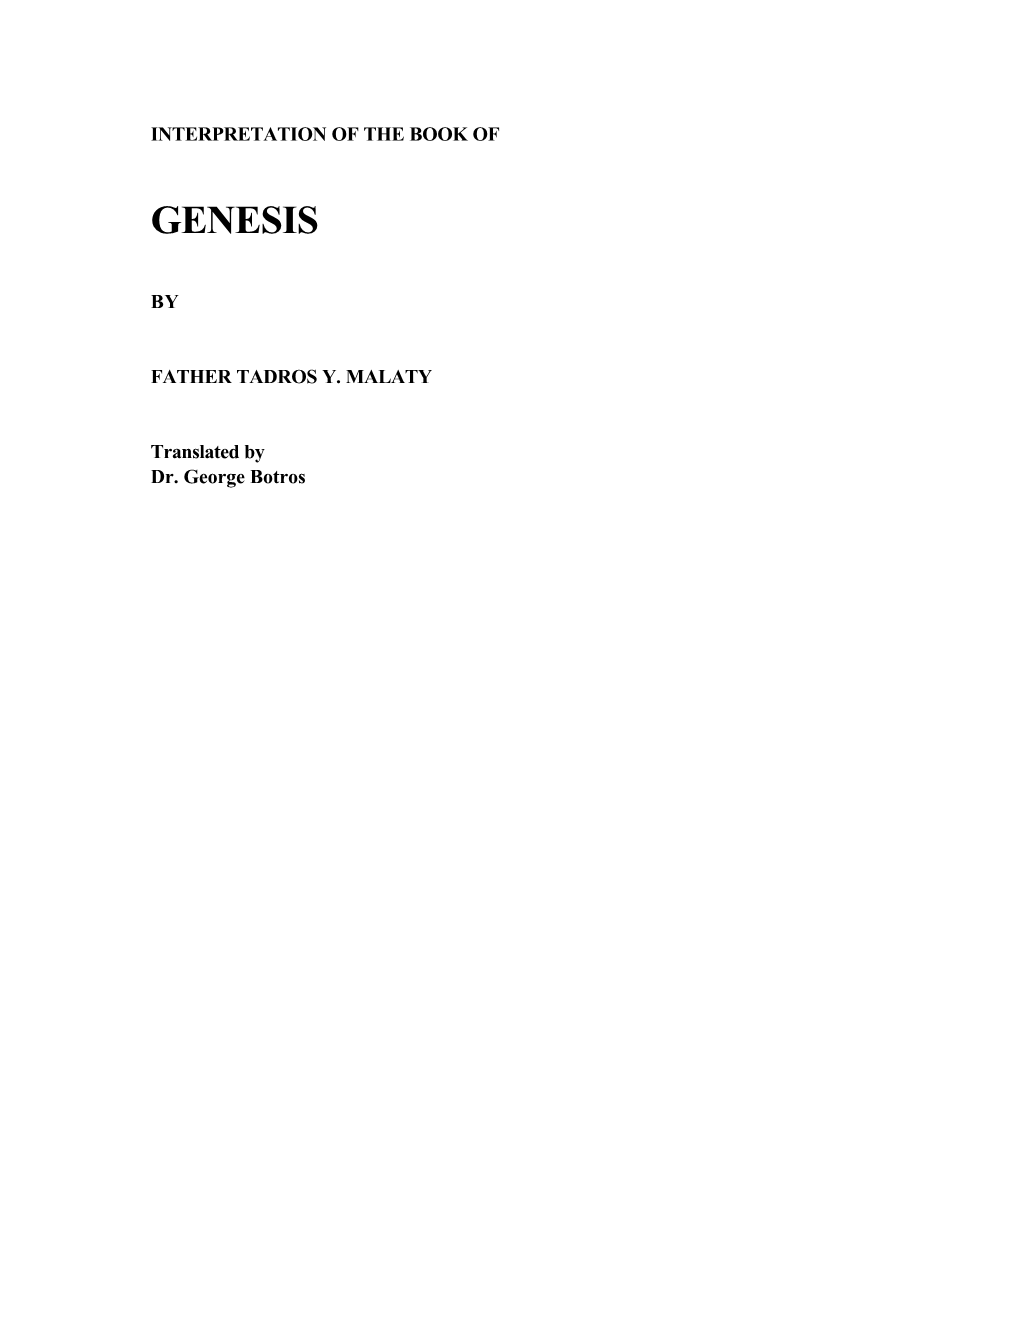 Interpretation of the Book of Genesis